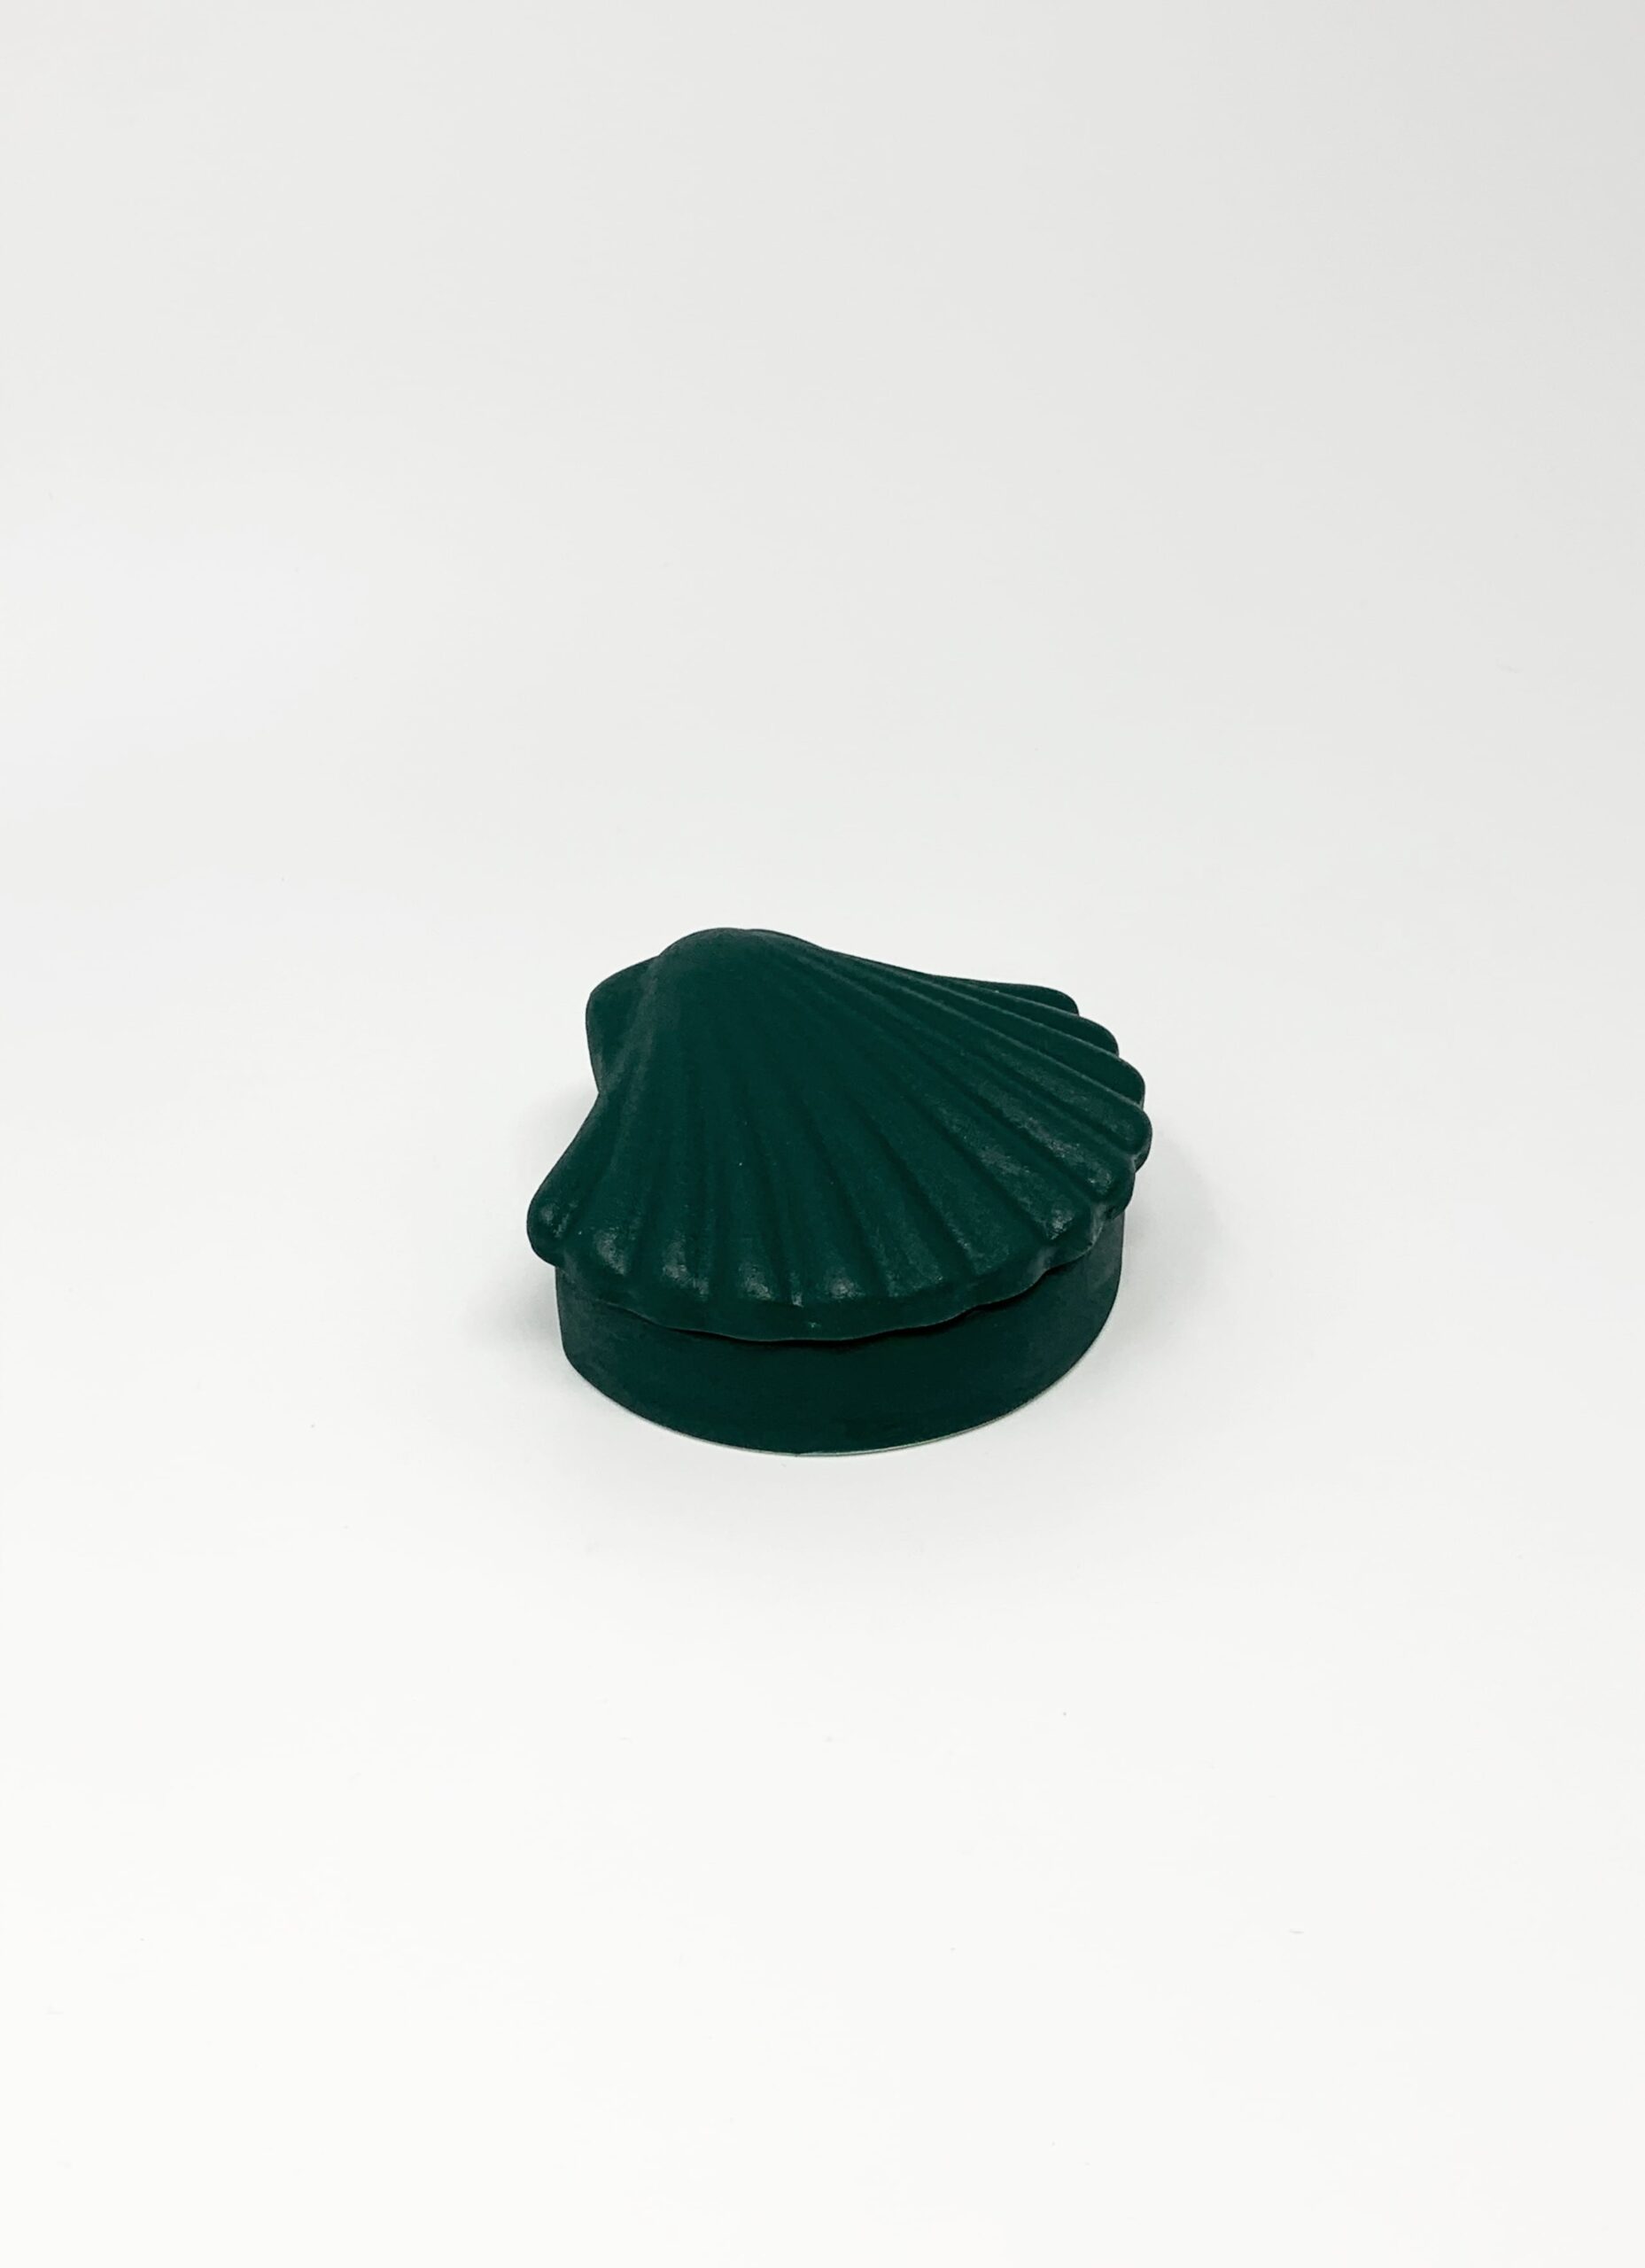 Los Objetos Decorativos - Seashell Box - Dark Green